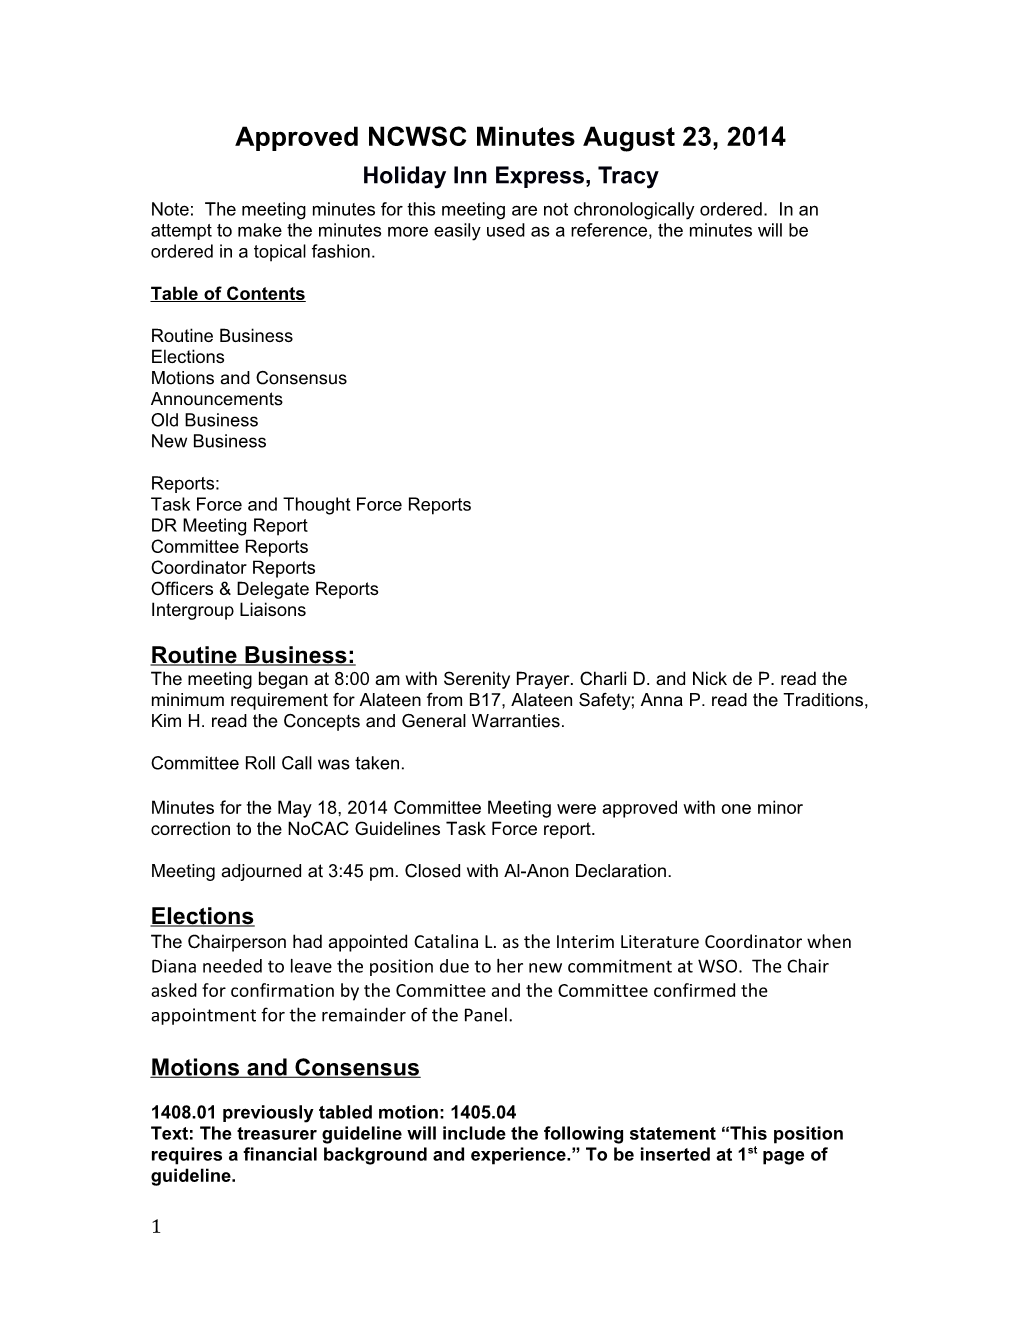 Holiday Inn Express, Tracy